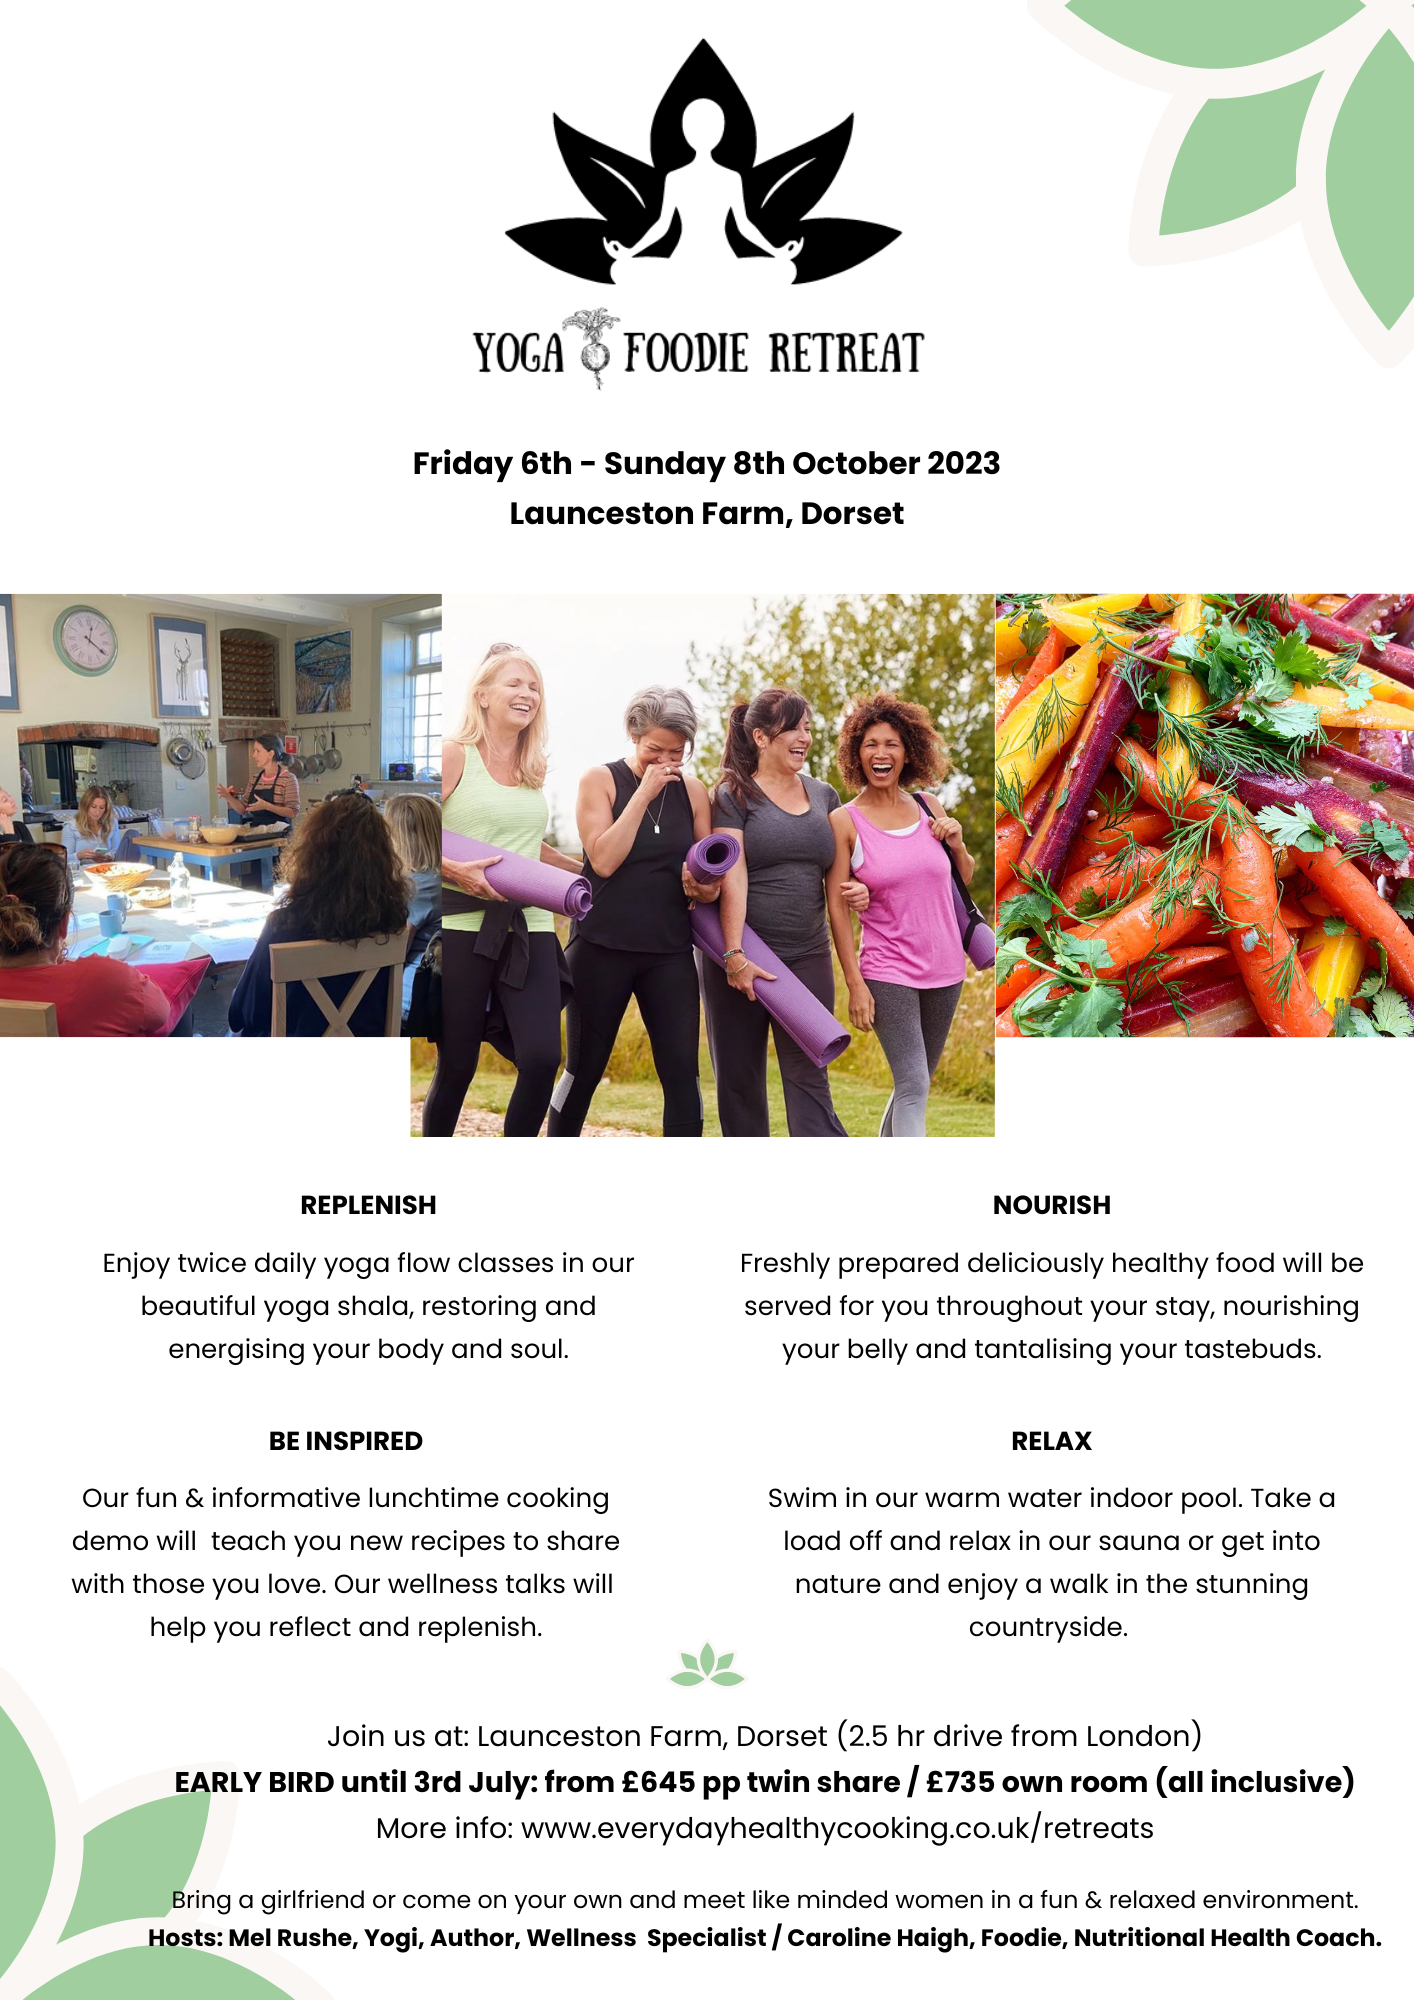 Yoga & Foodie Retreat Dorset